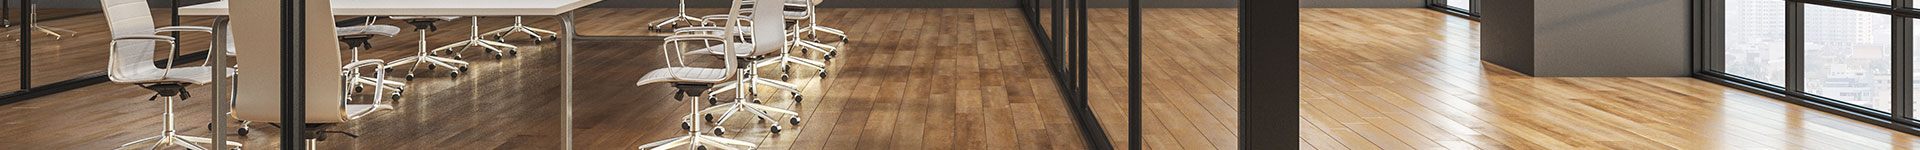 Commercial Flooring Carpet Tile